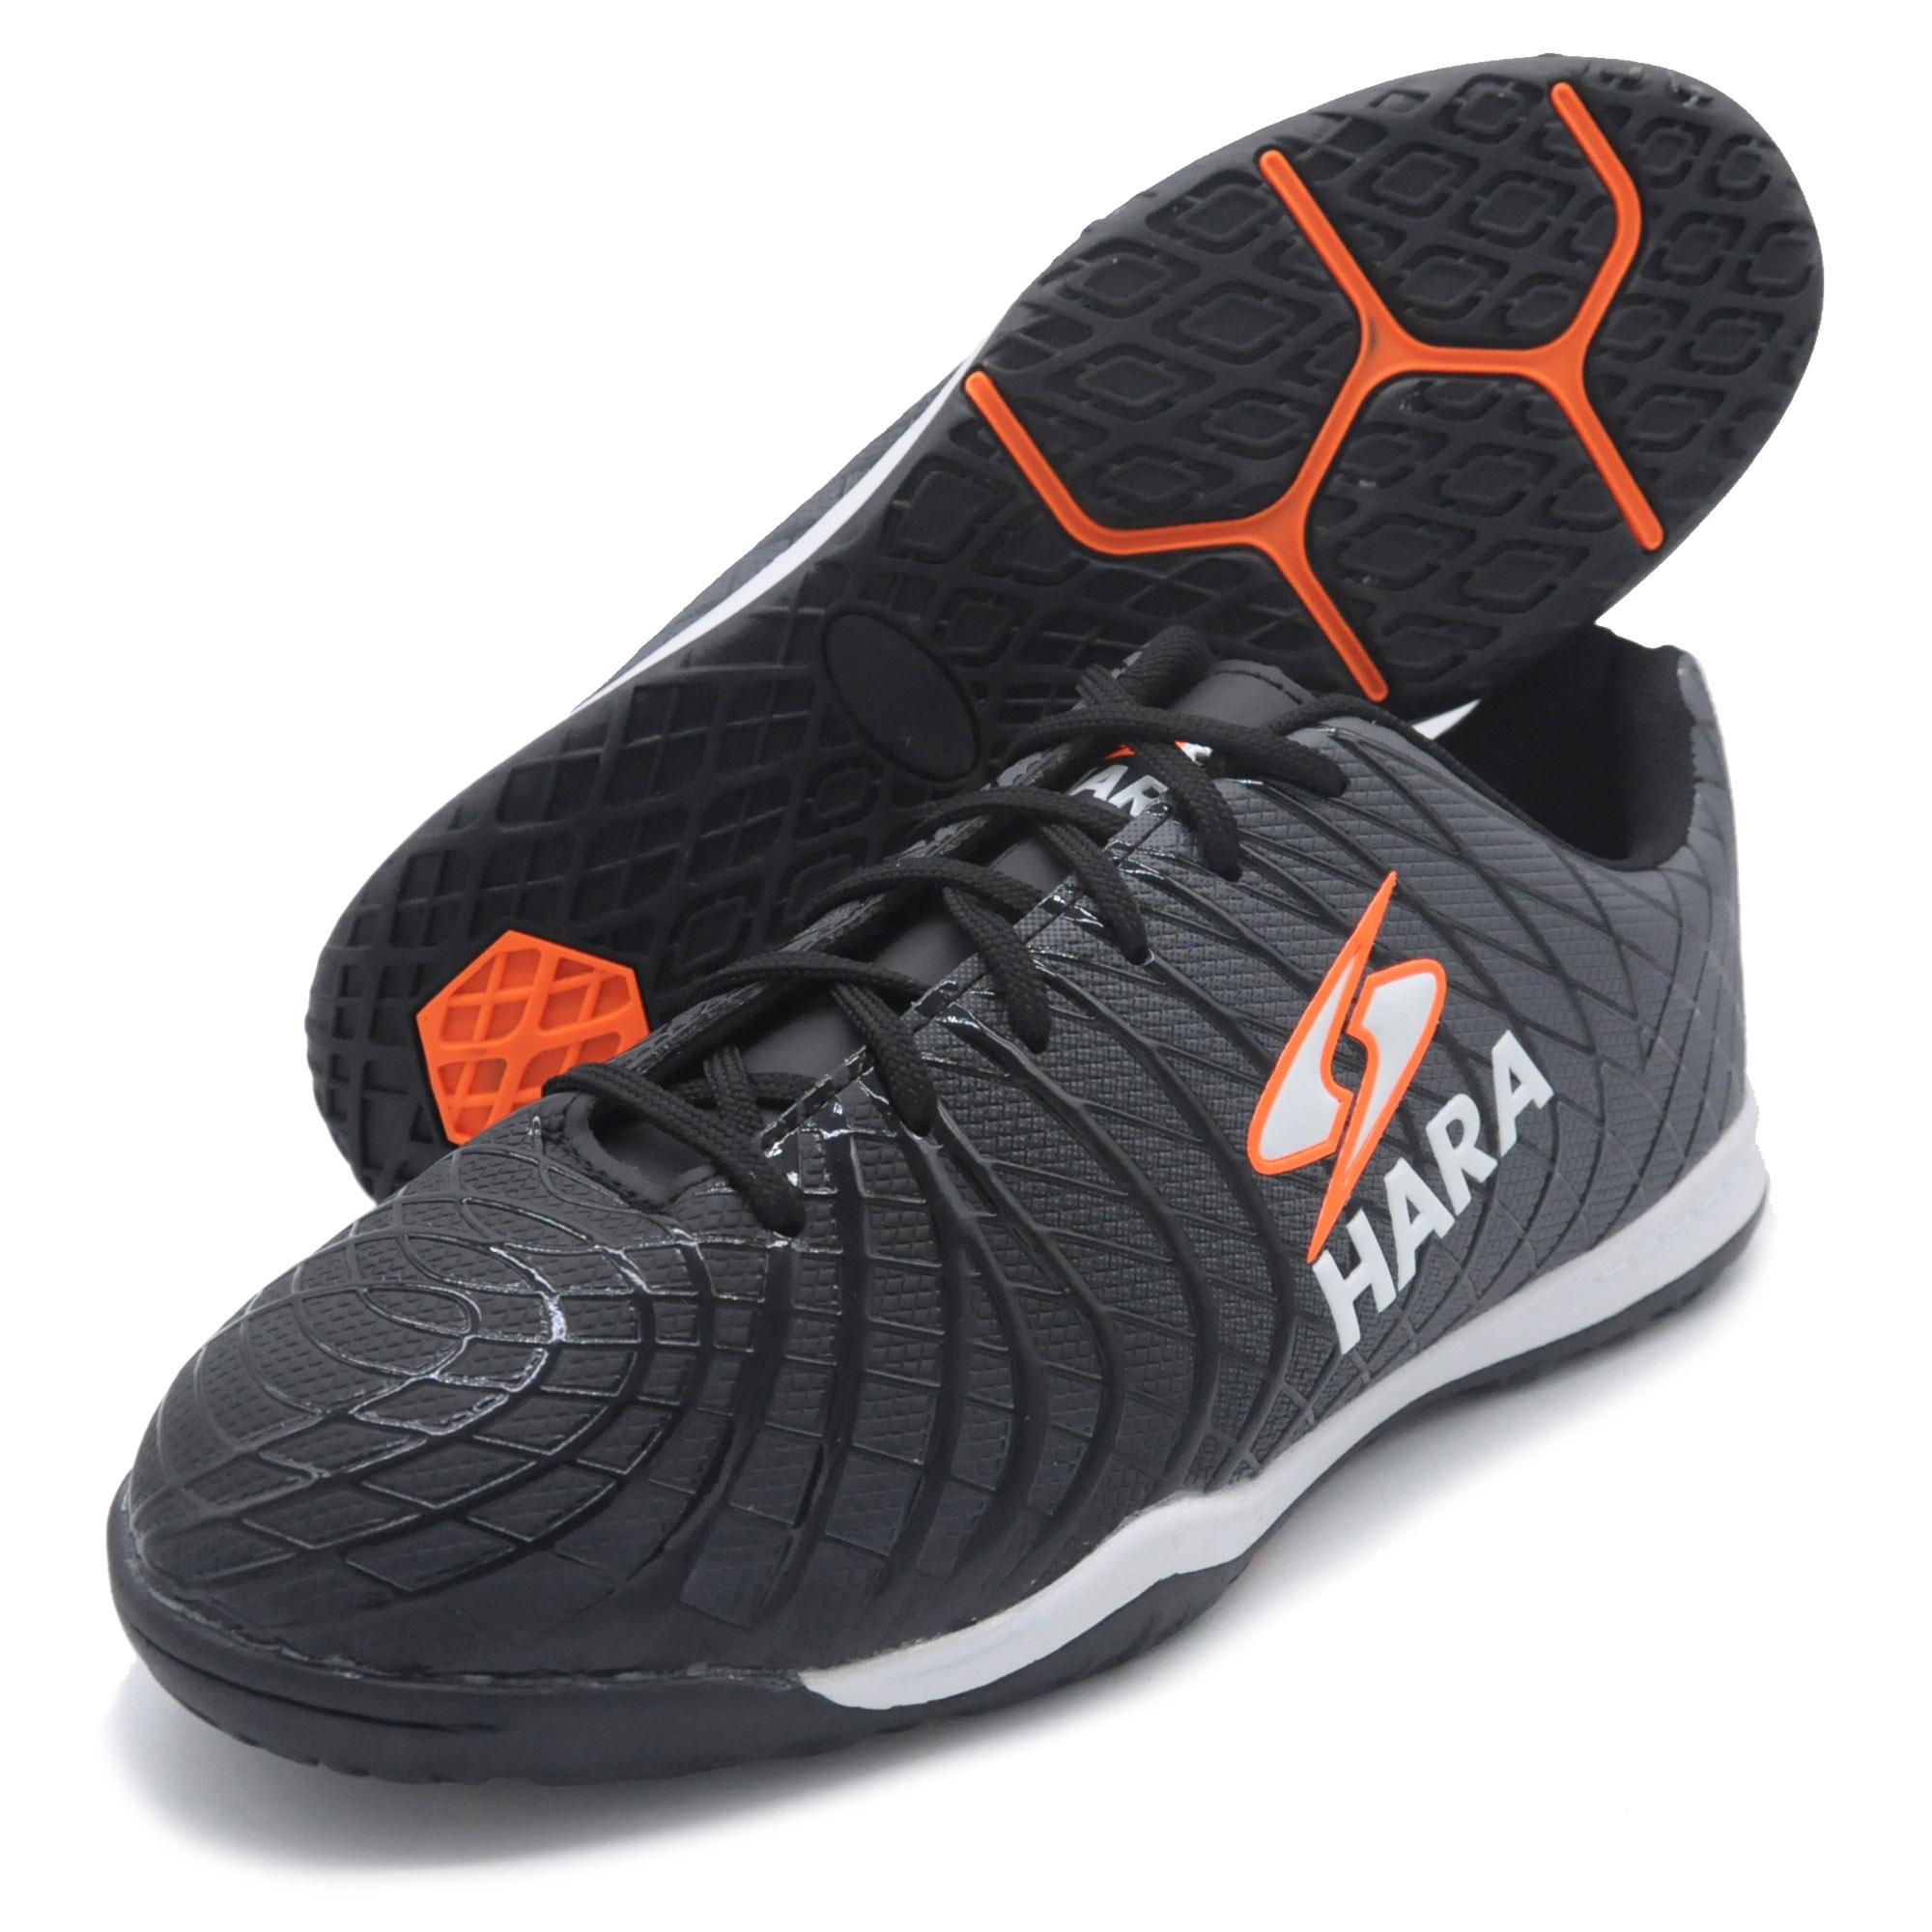 HARA Sports รองเท้าฟุตซอล รุ่น FS25 สีดำ